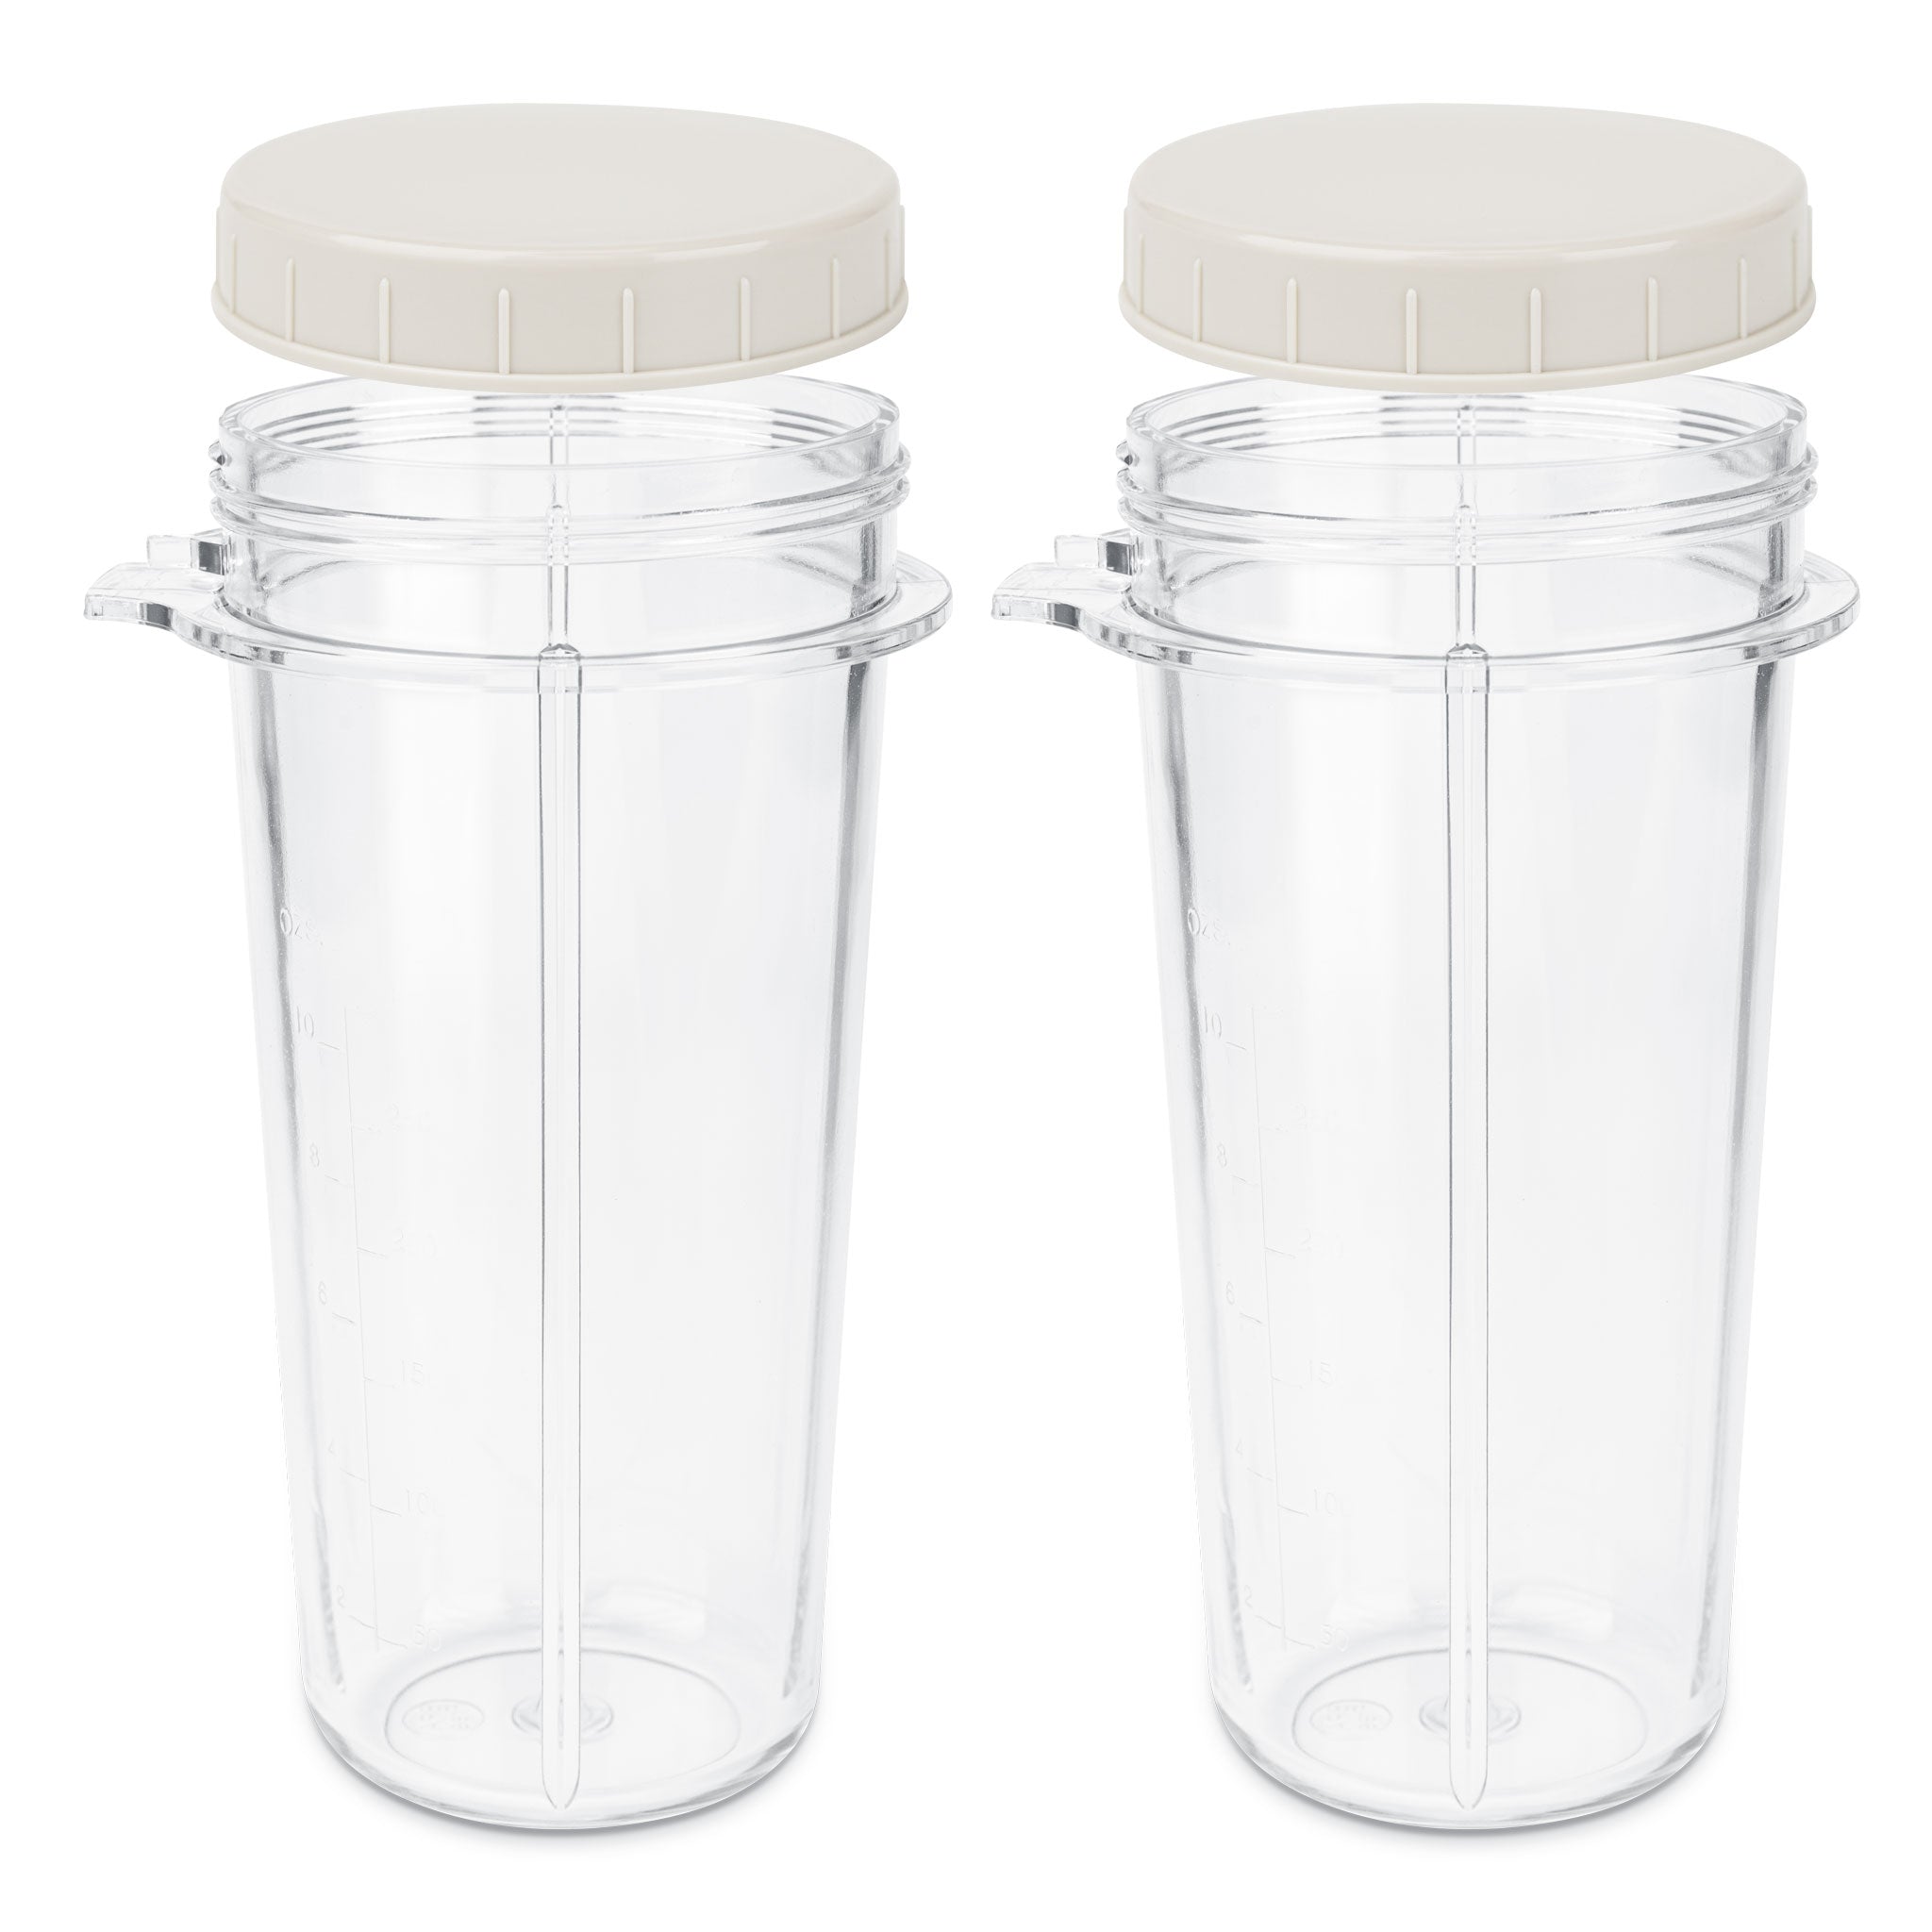 Personal Blender® Blending Cups with Lids, Set of 2 (16 oz)